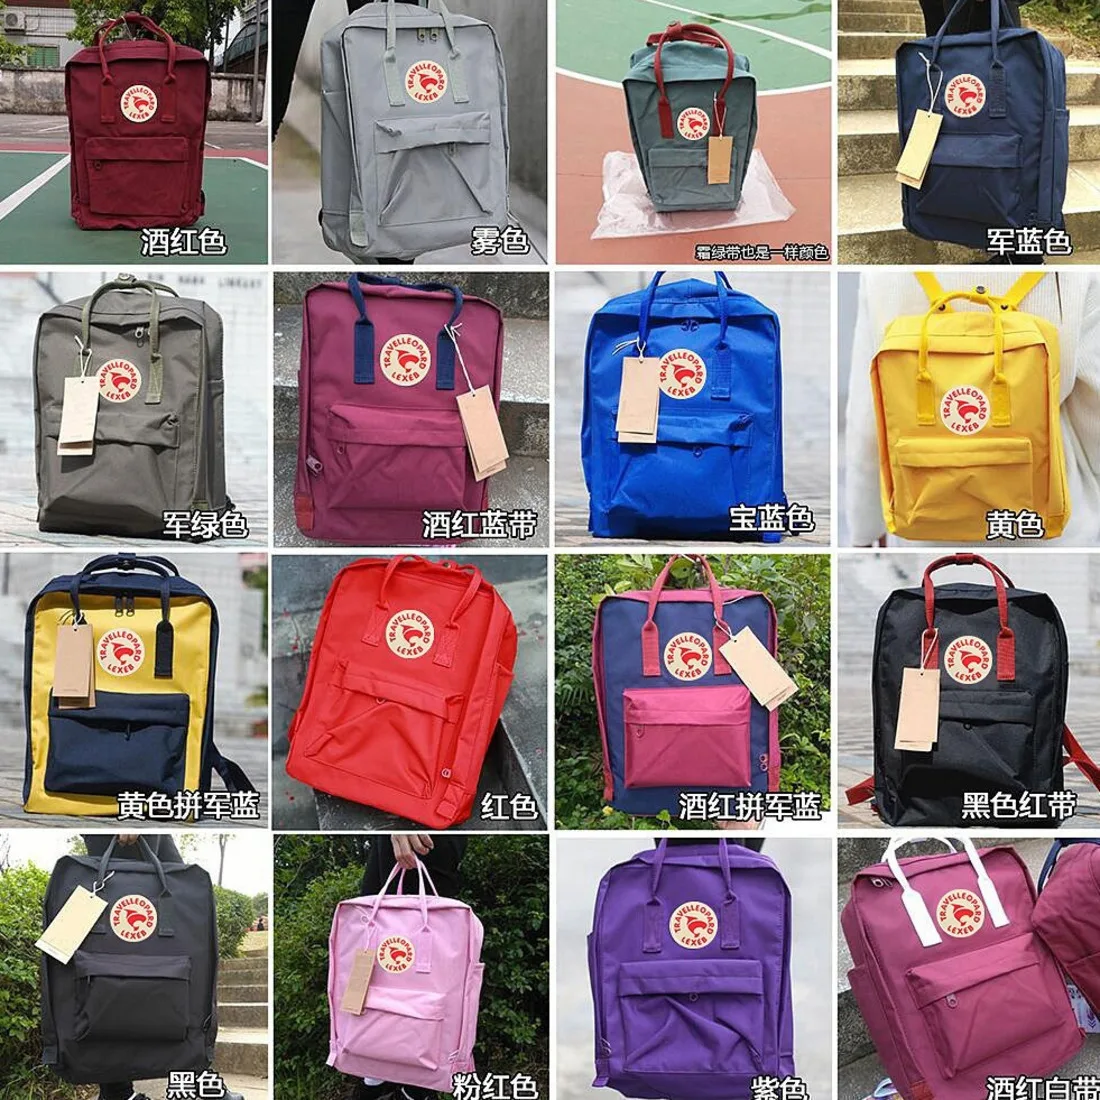 

Original kanken Backpack Classic Mini Mochilas School Bag 2018 16l With Fox Logo Backpack Women Men Boy Girls Kid 2019